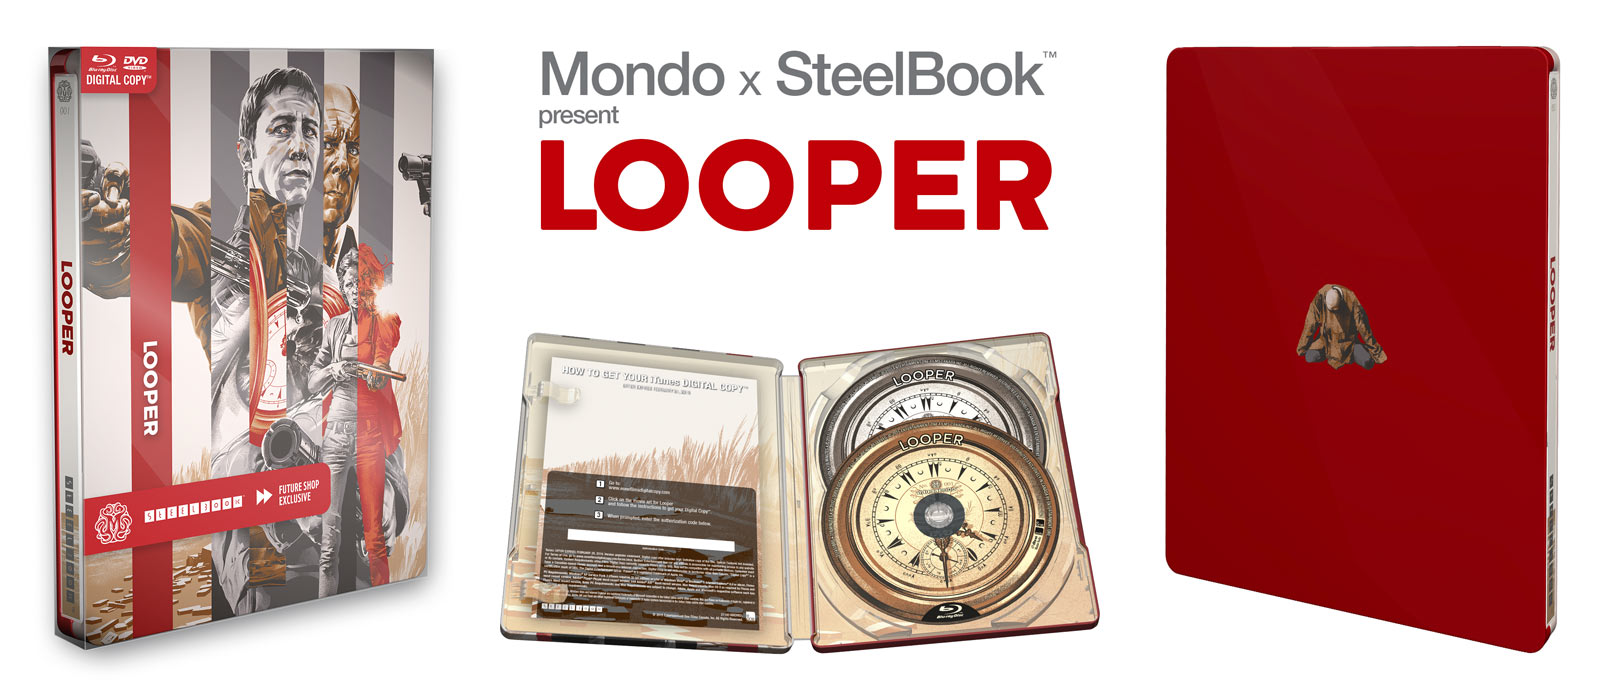 looper-mondo-x-steelbook-standard